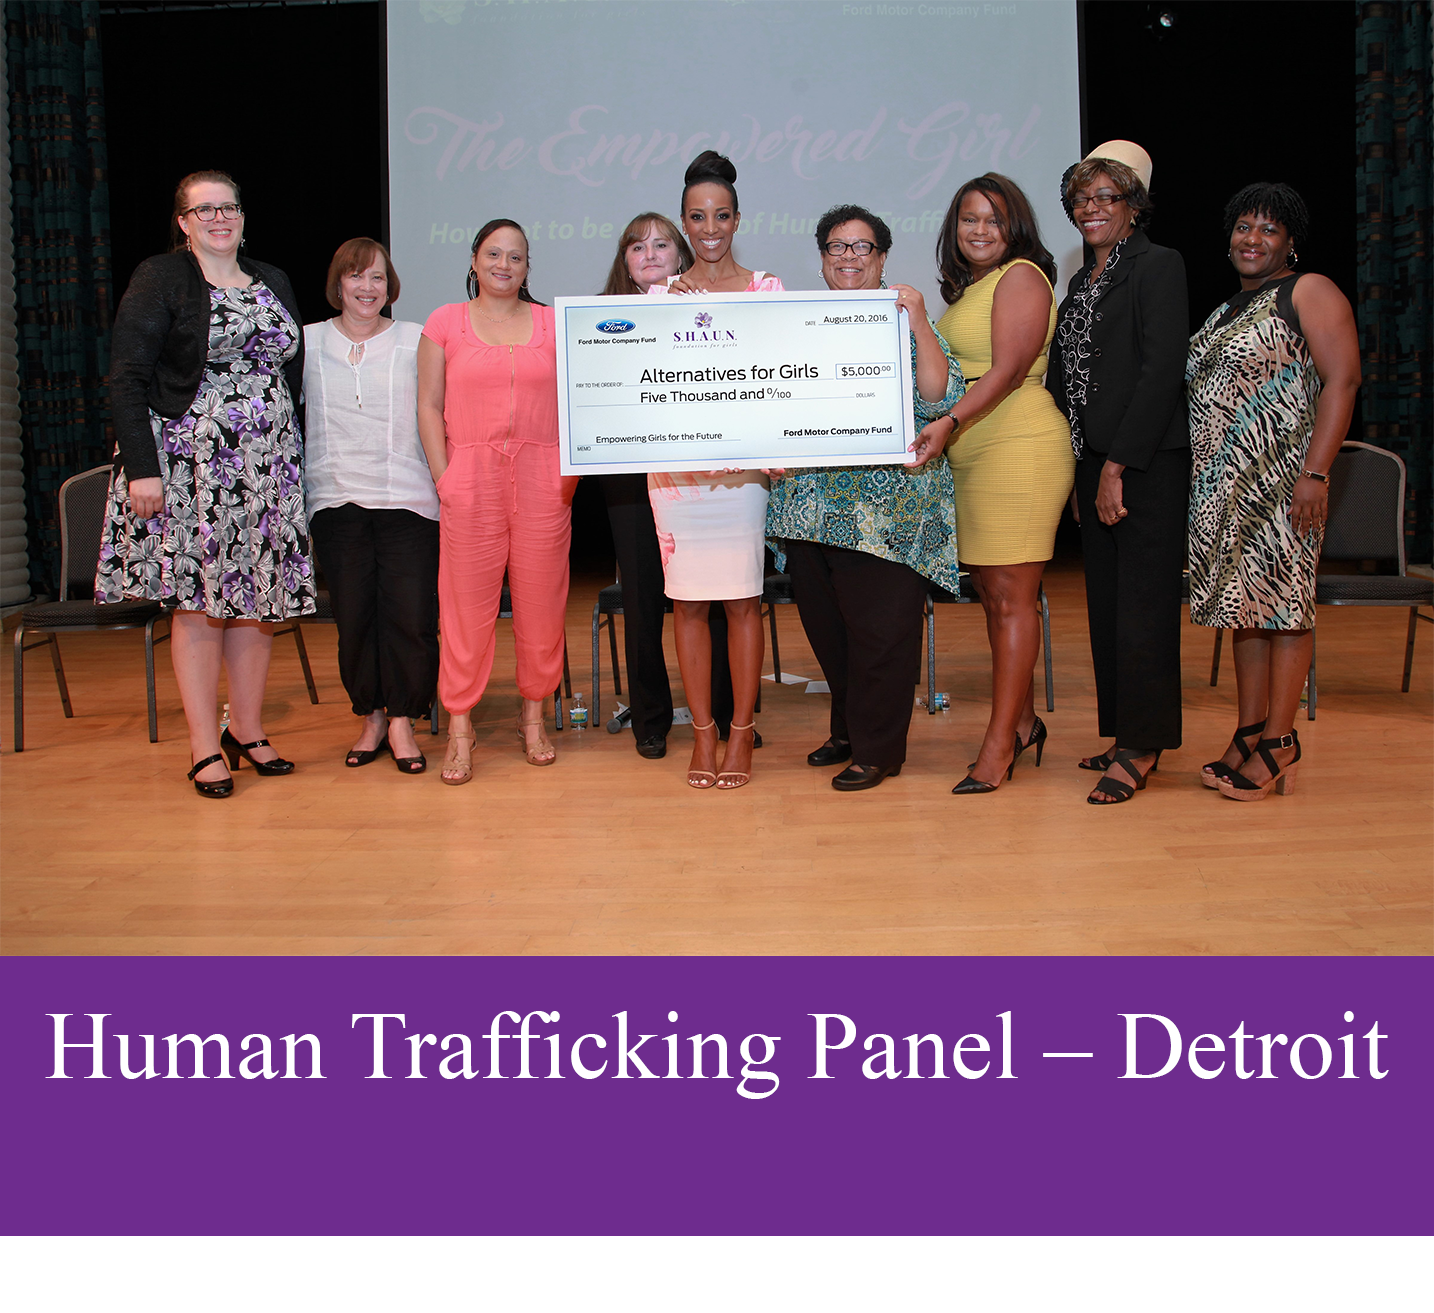 Human Trafficking Prevention Panel in Detroit